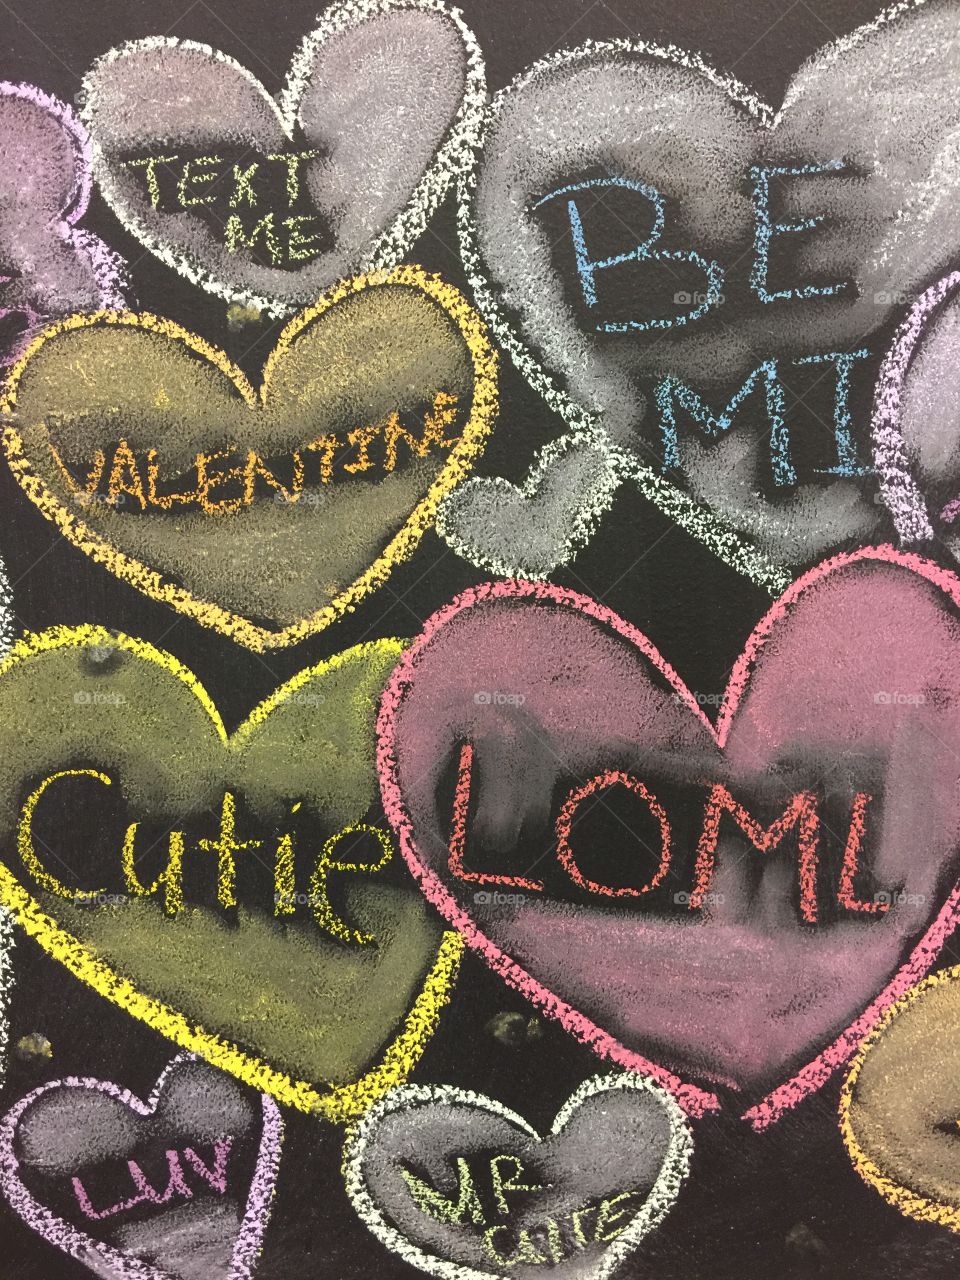 Chalk
Black board
Valentine
Love 